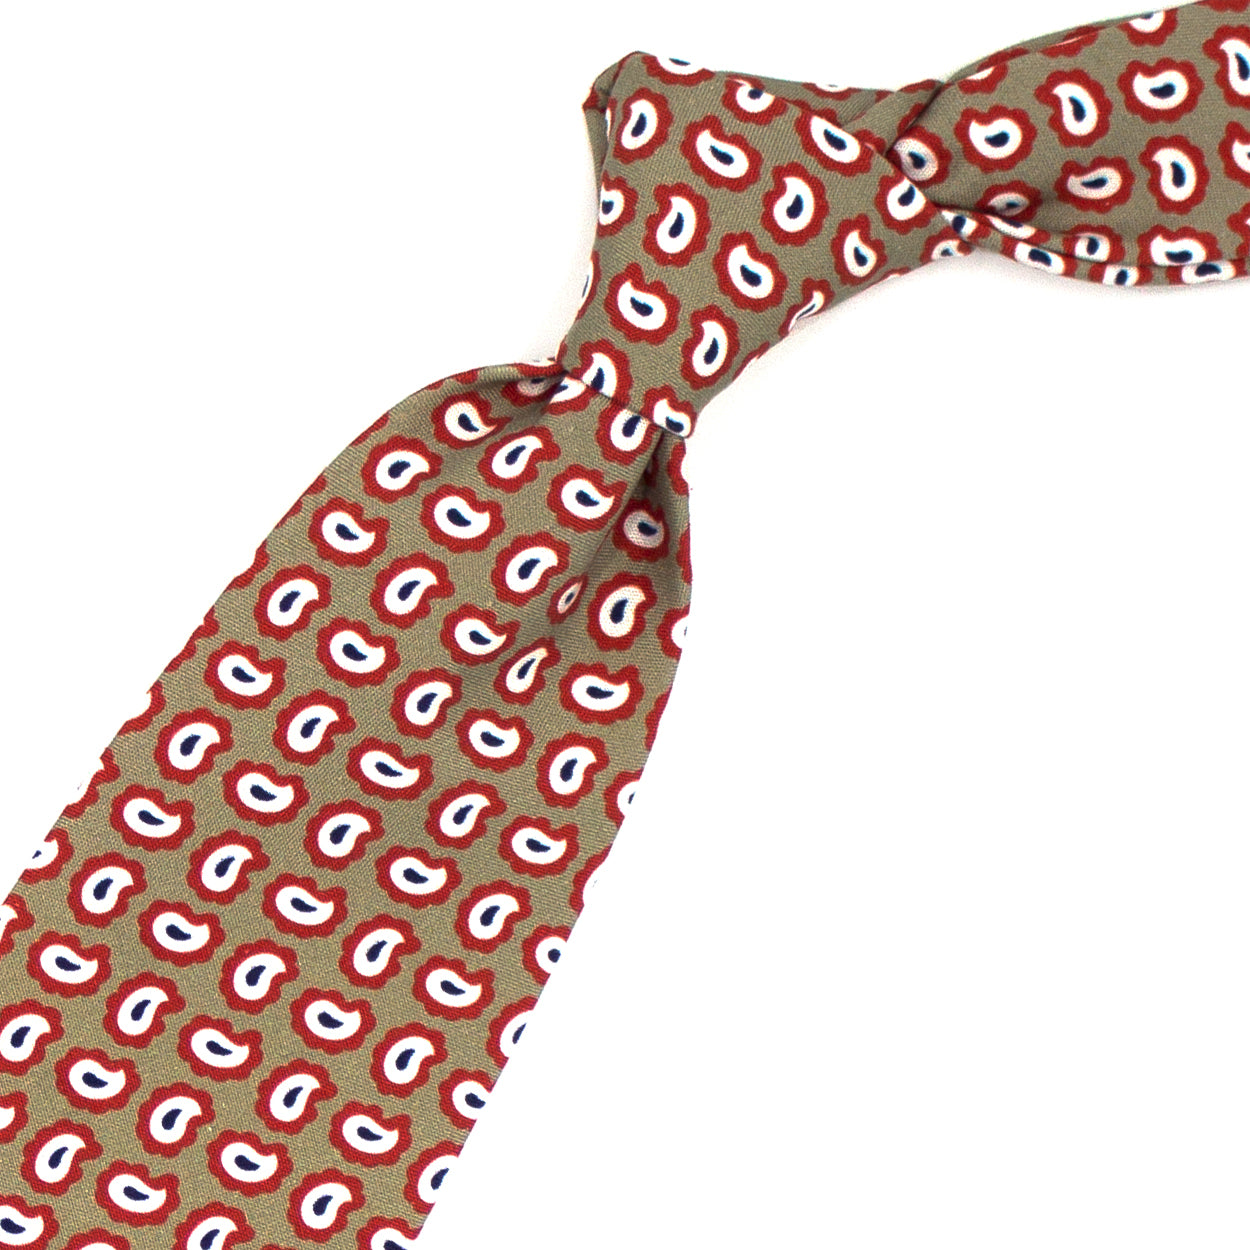 Beige tie with paisley